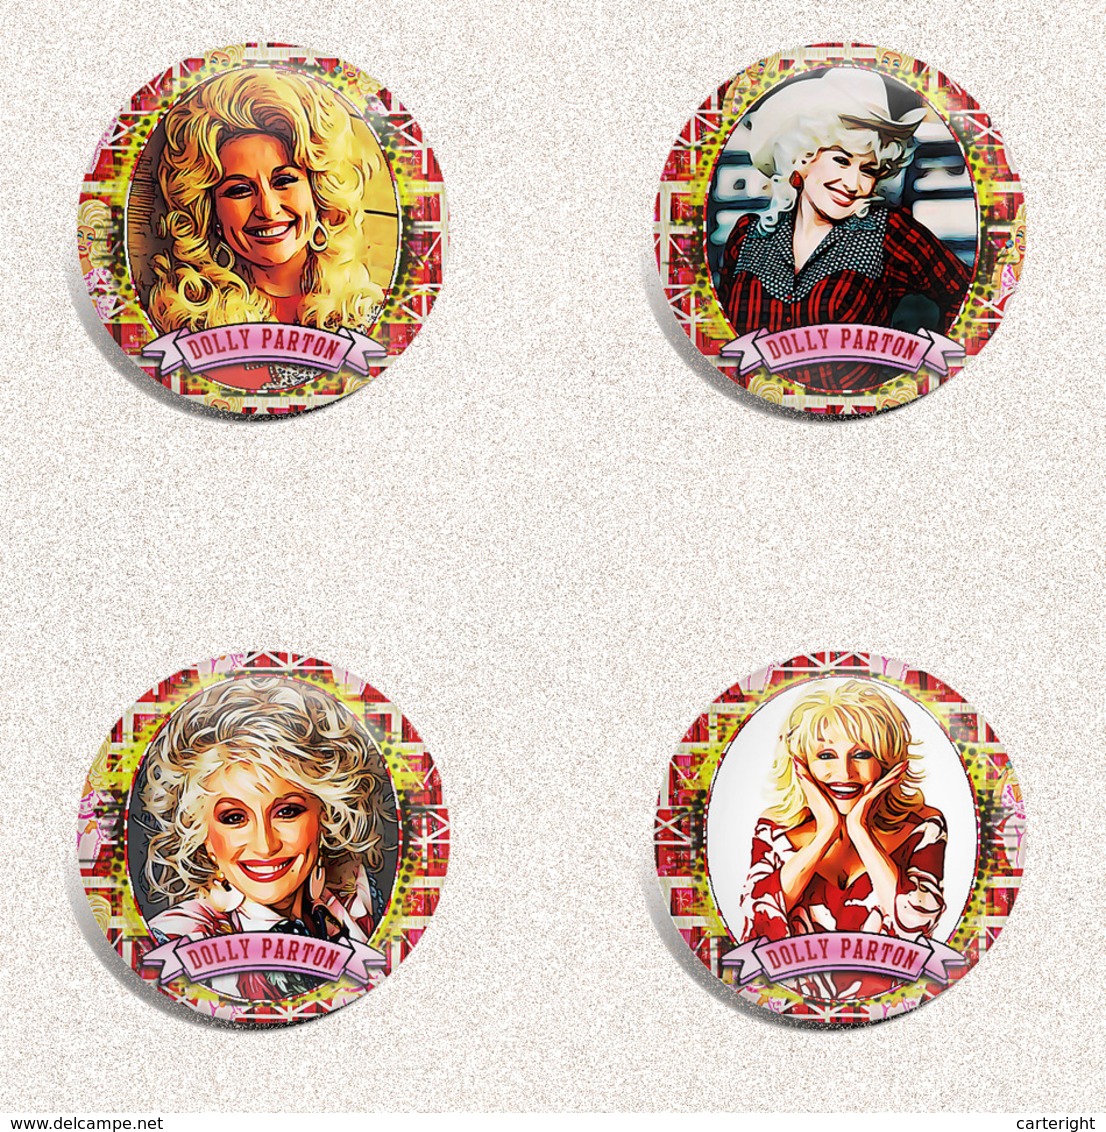 140 X Dolly Parton Music Fan ART BADGE BUTTON PIN SET 5-8 (1inch/25mm Diameter) - Music